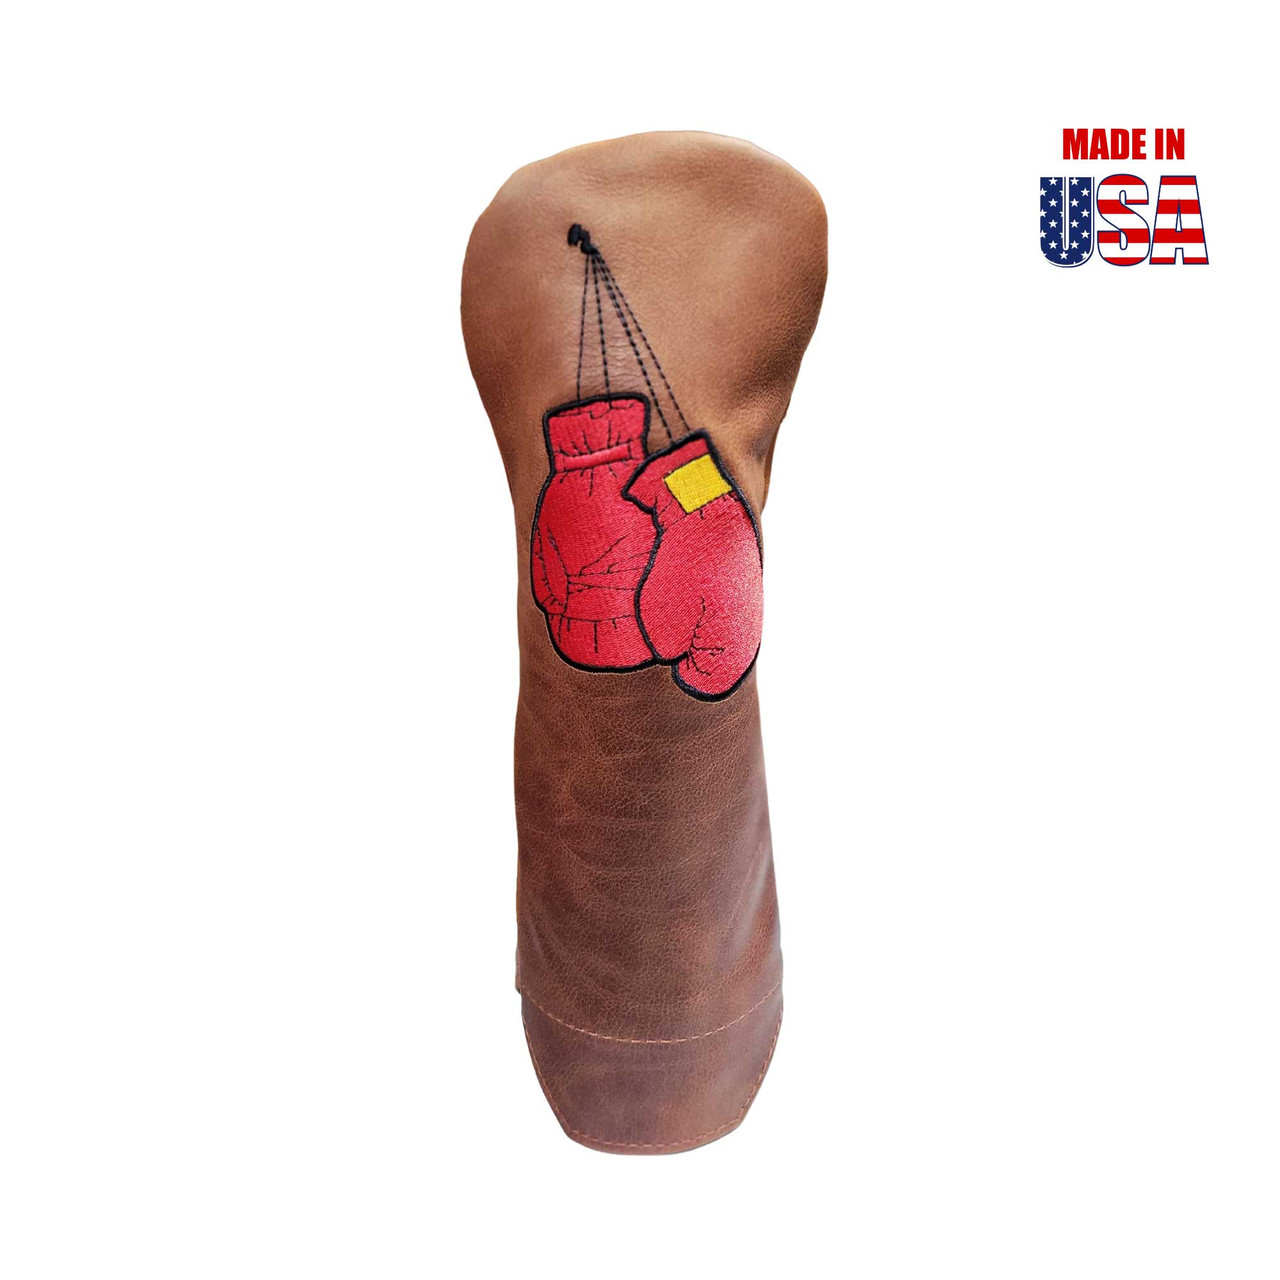 Boxing Gloves Supreme